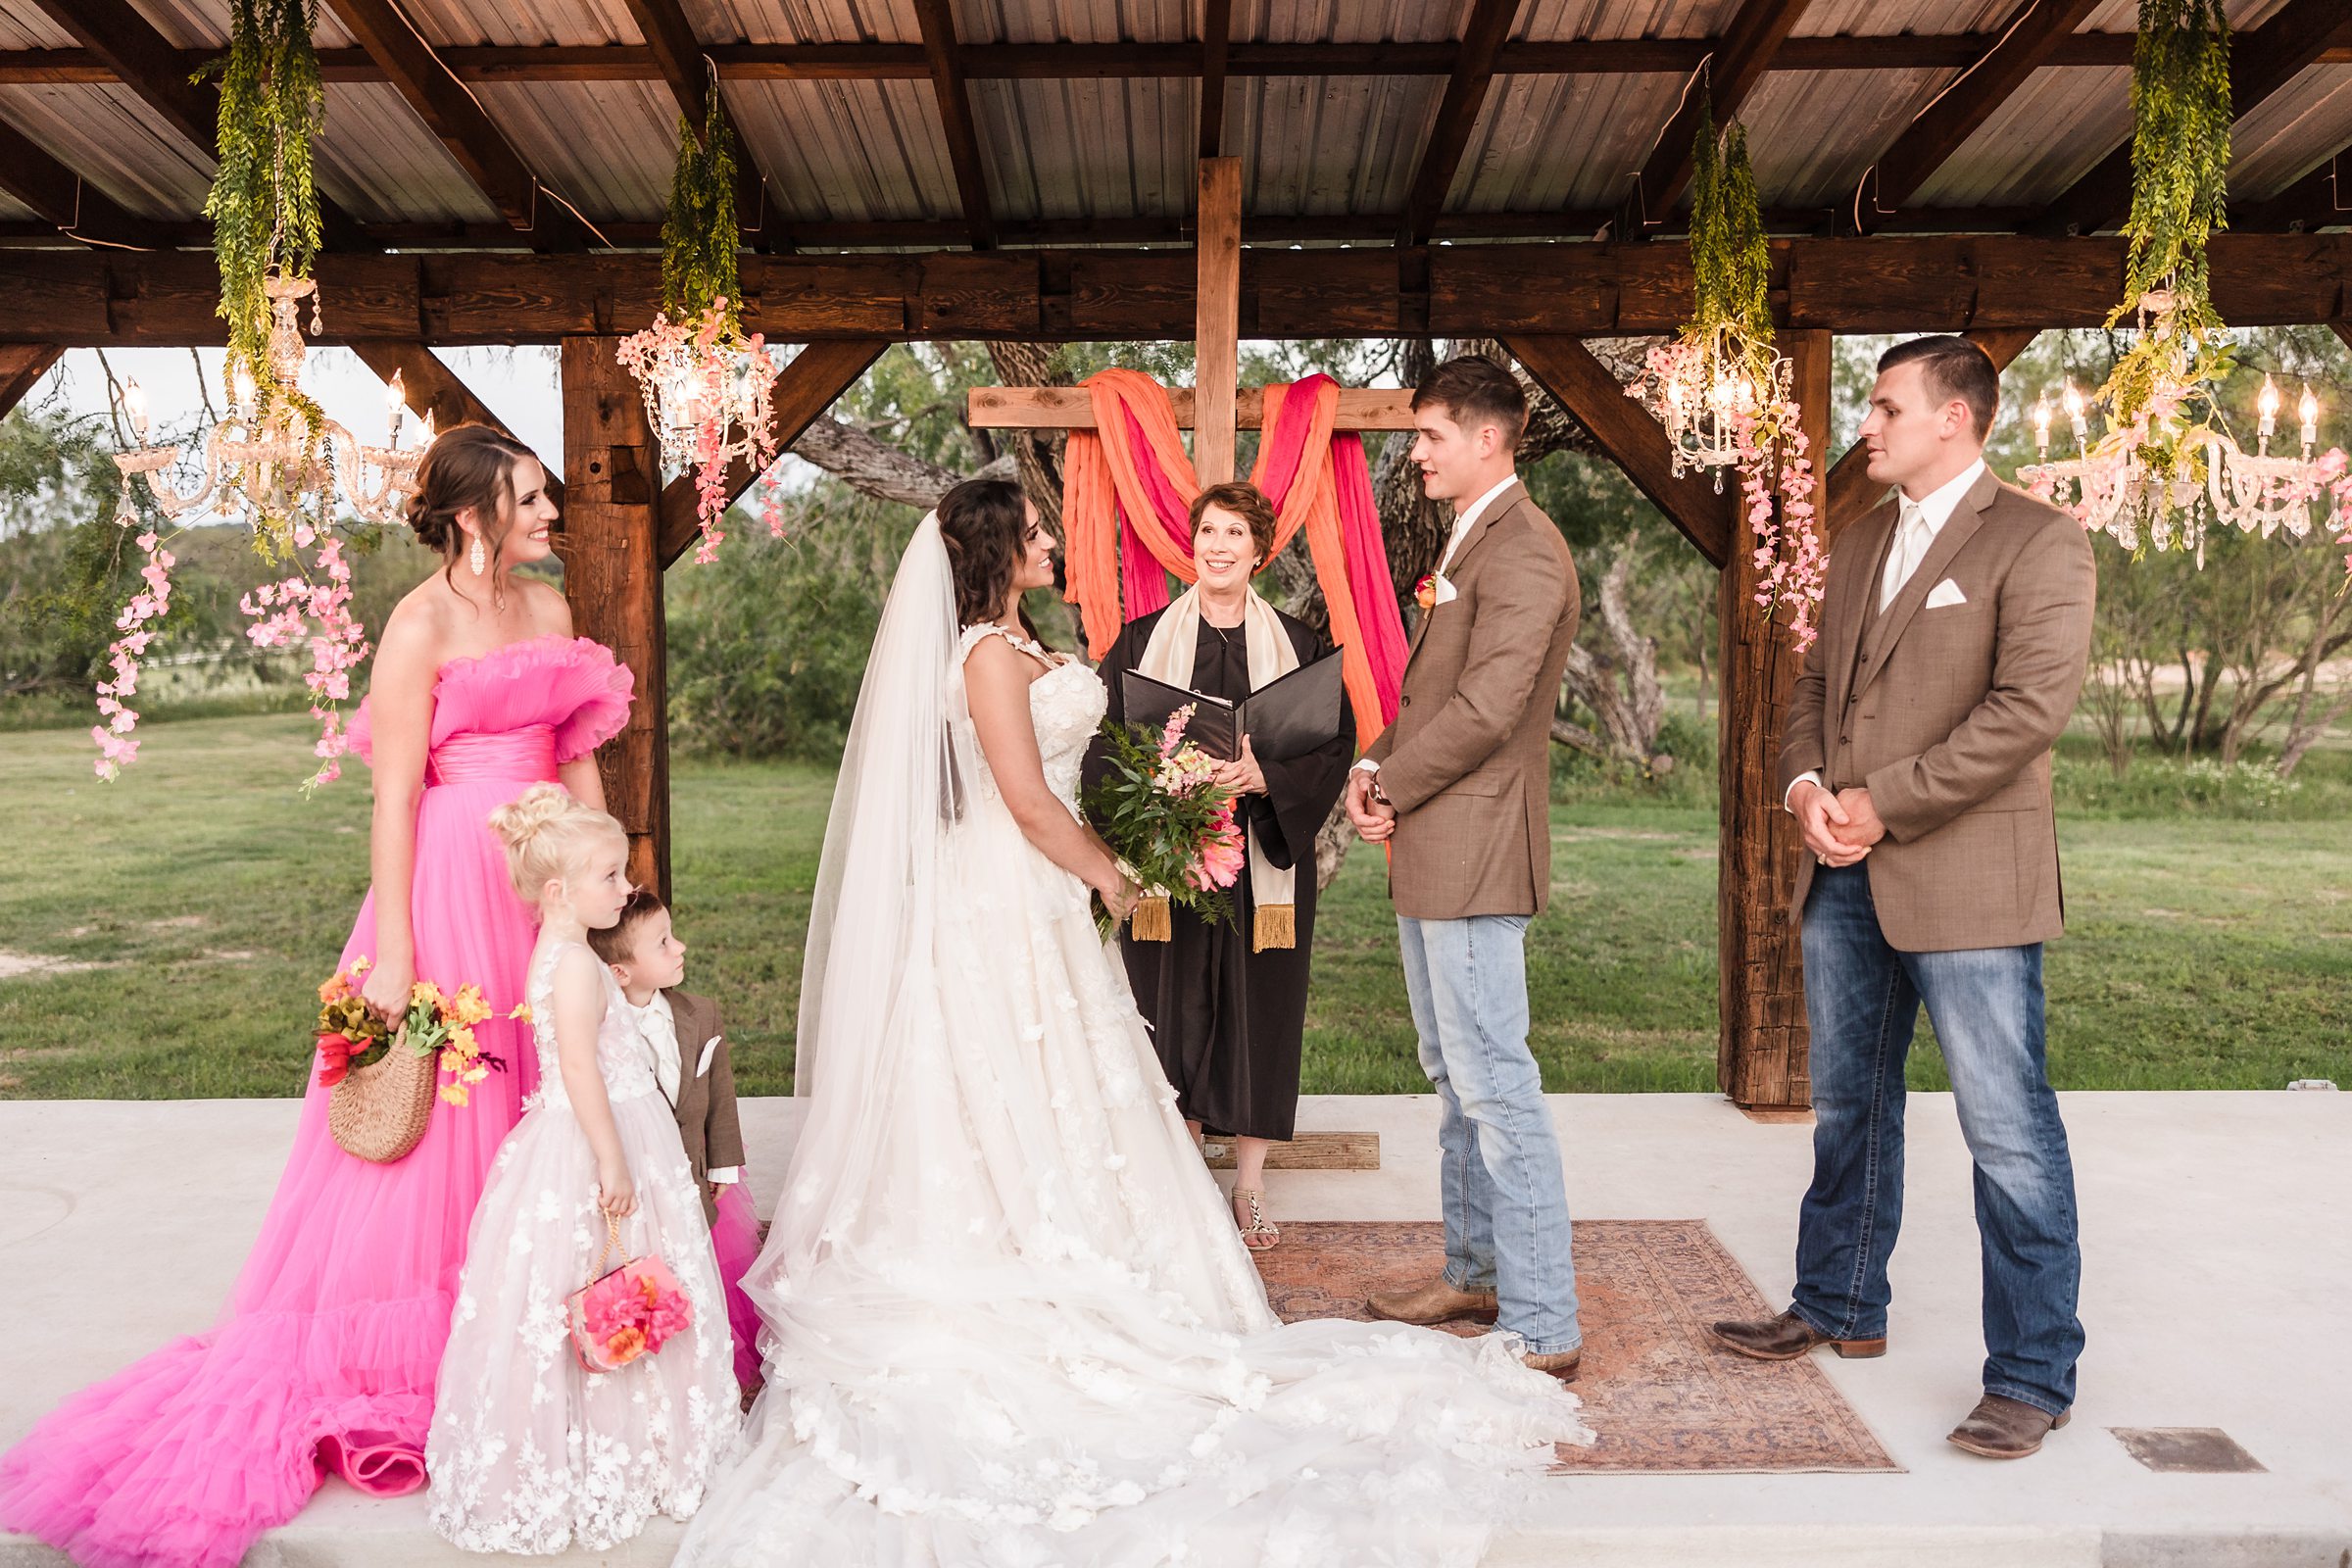 Bride and Groom during wedding ceremony at the Grandview wedding venue in La Vernia, Texas.